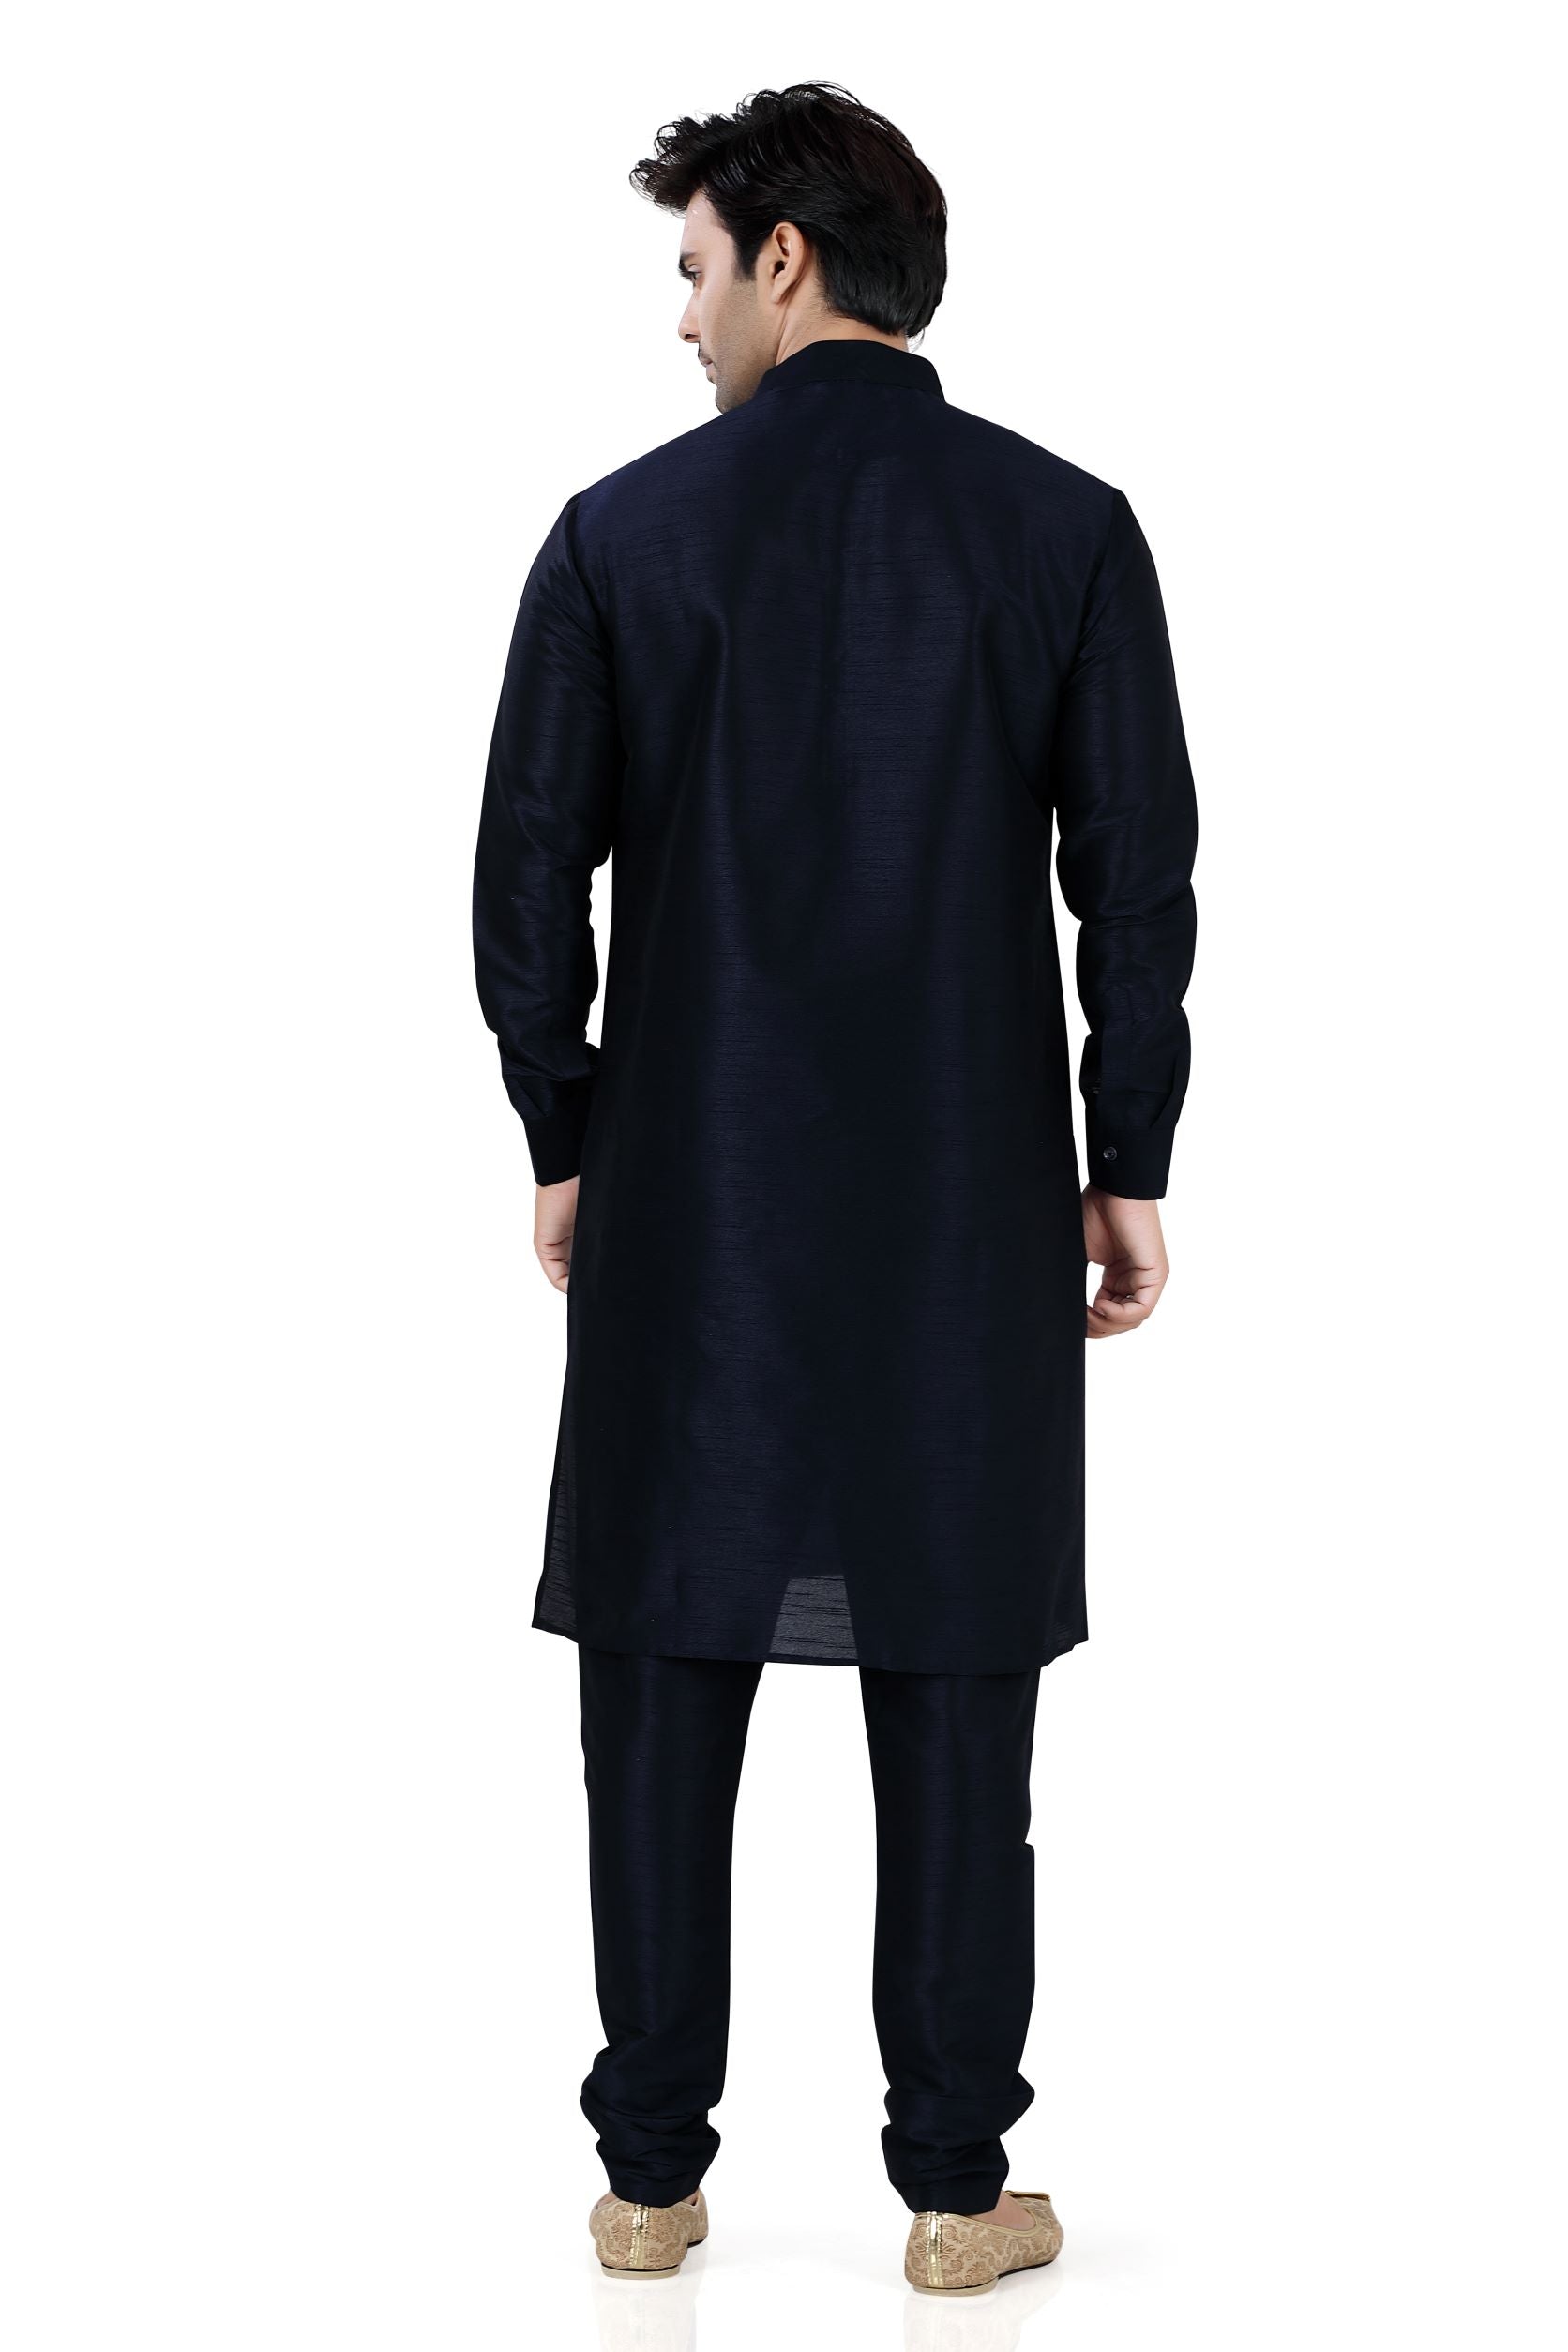 Dupion Silk Kurta in black - Premium kurta pajama from Dapper Ethnic - Just $29! Shop now at Dulhan Exclusives